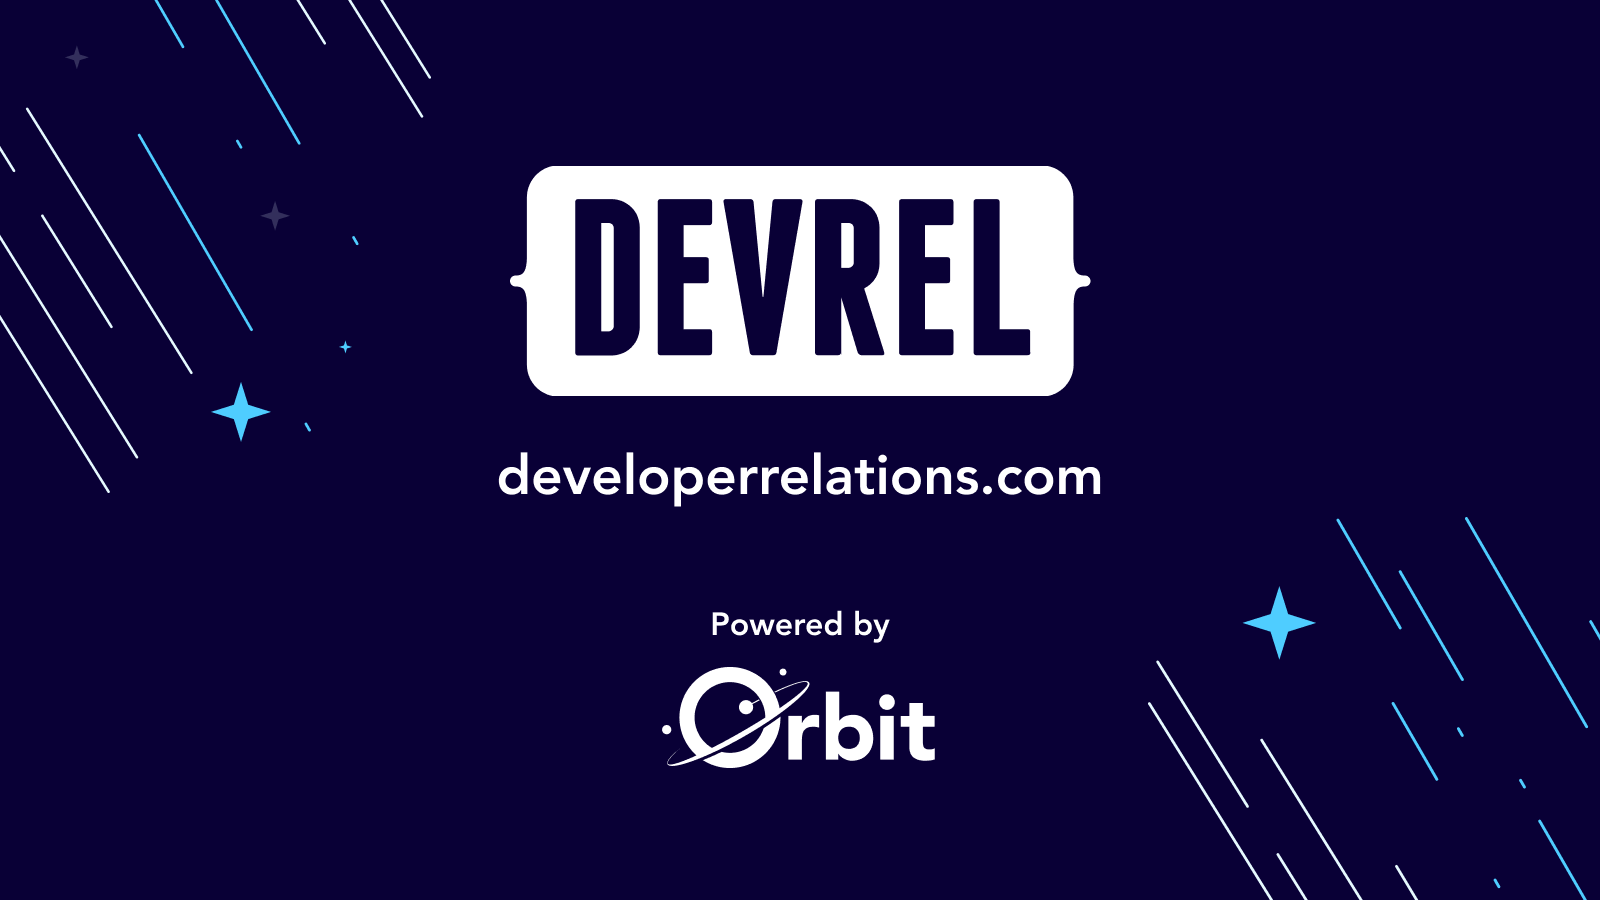 DeveloperRelations.com is joining Orbit